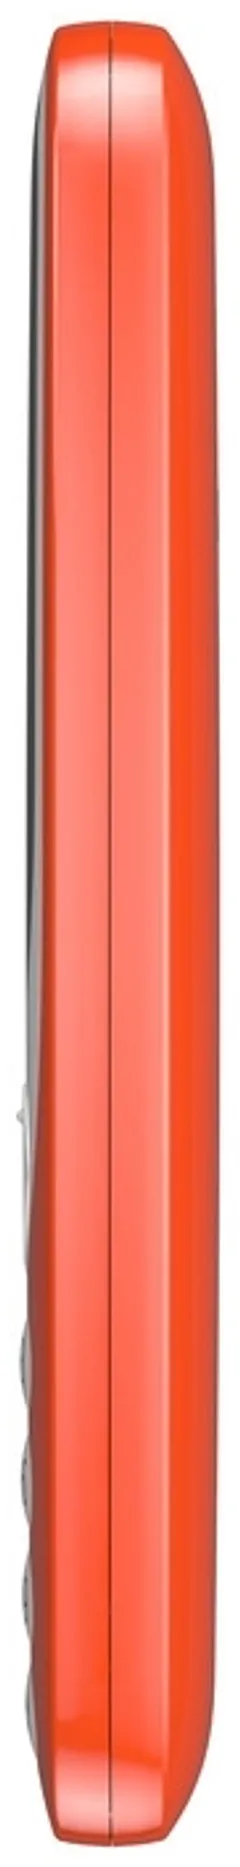 Nokia 3310 dual-sim 2G matkapuhelin punainen - 3